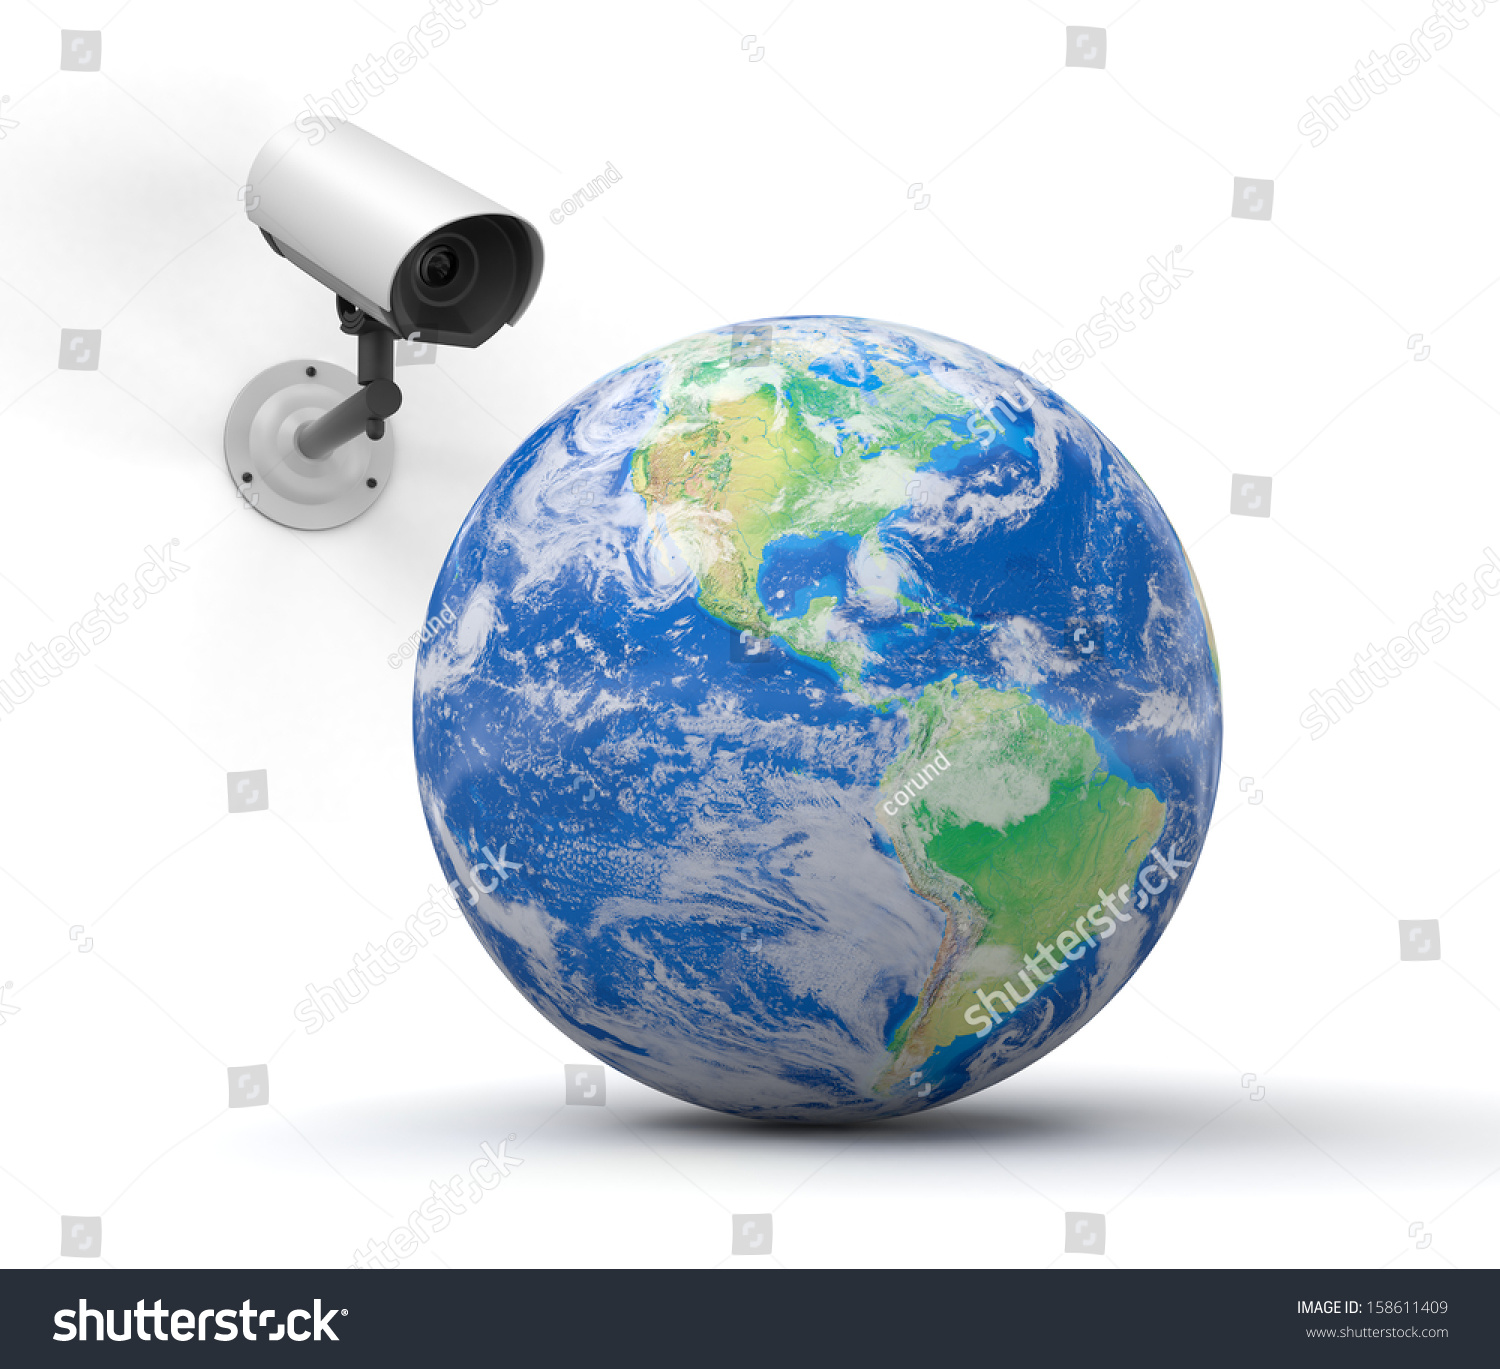 security camera and globe. Earth map provided by NASA #158611409